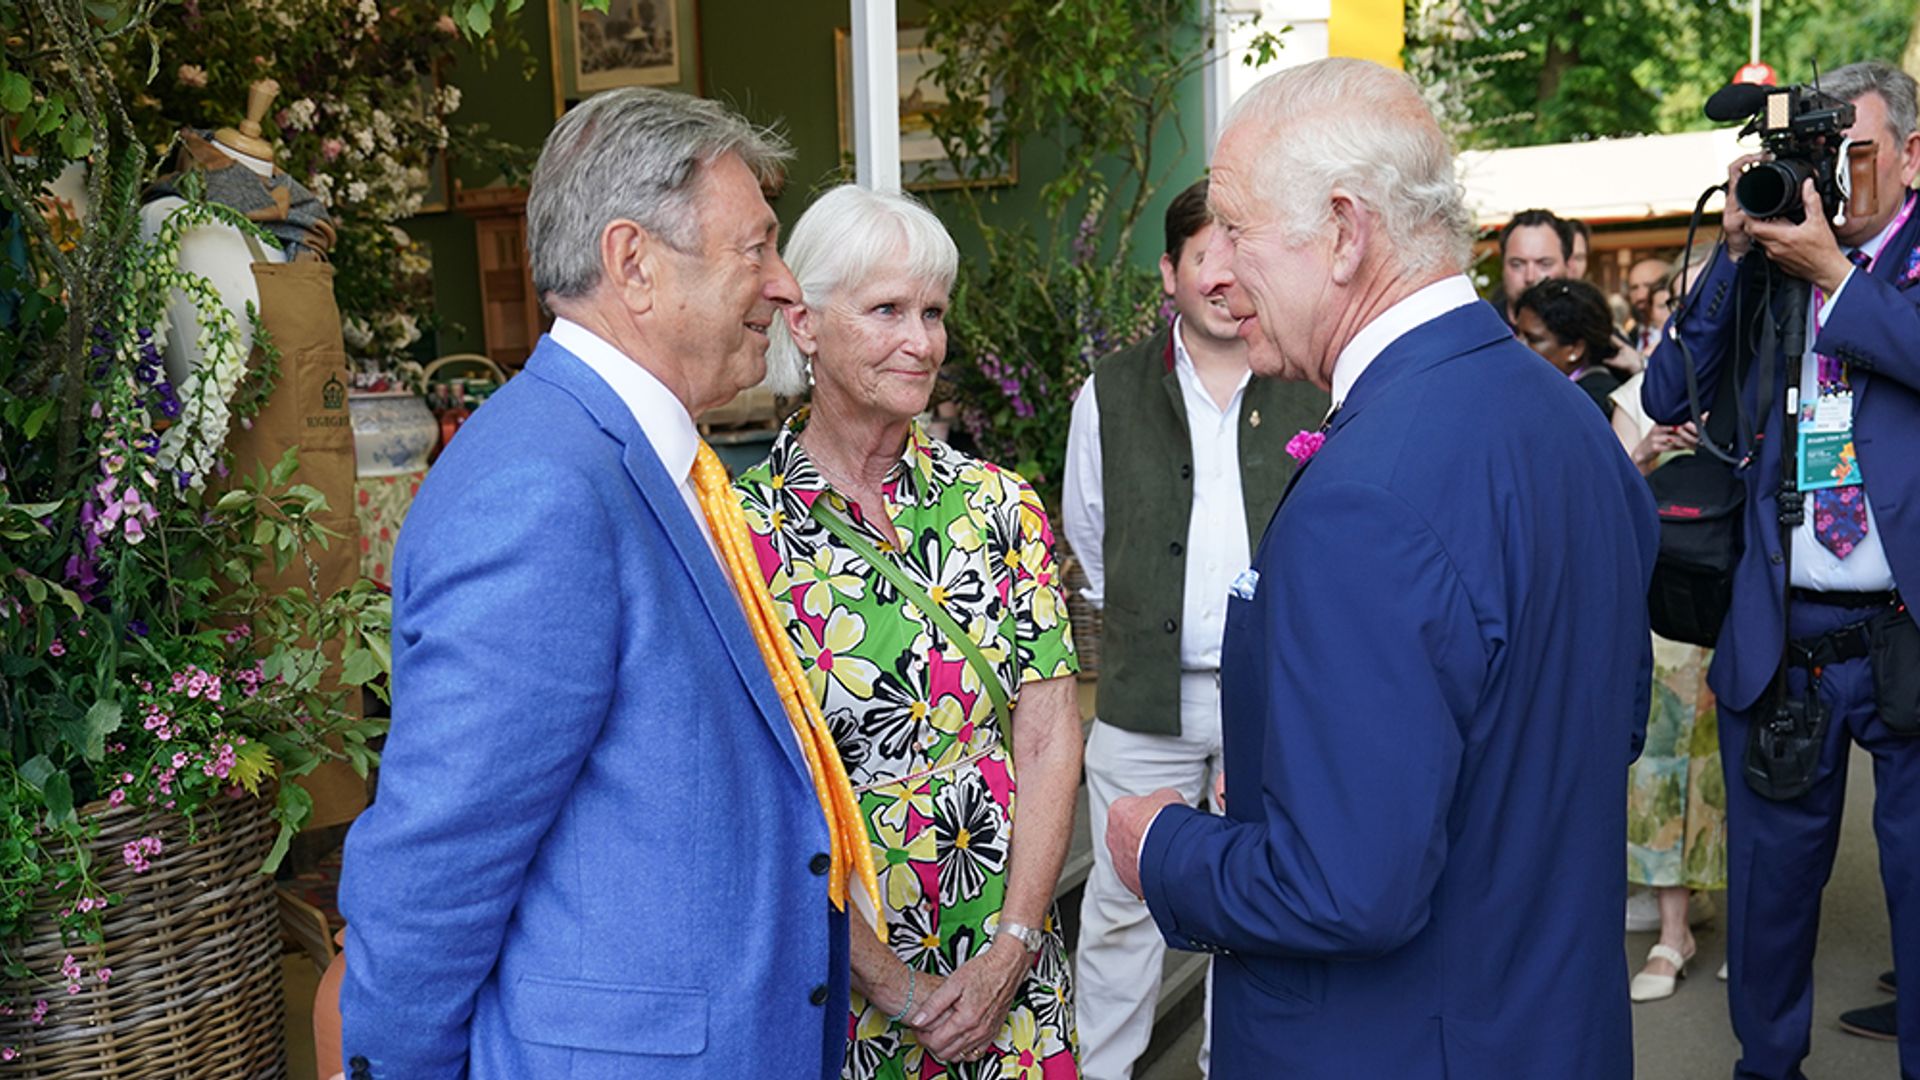 King Charles chatting with Alan Titchmarsh